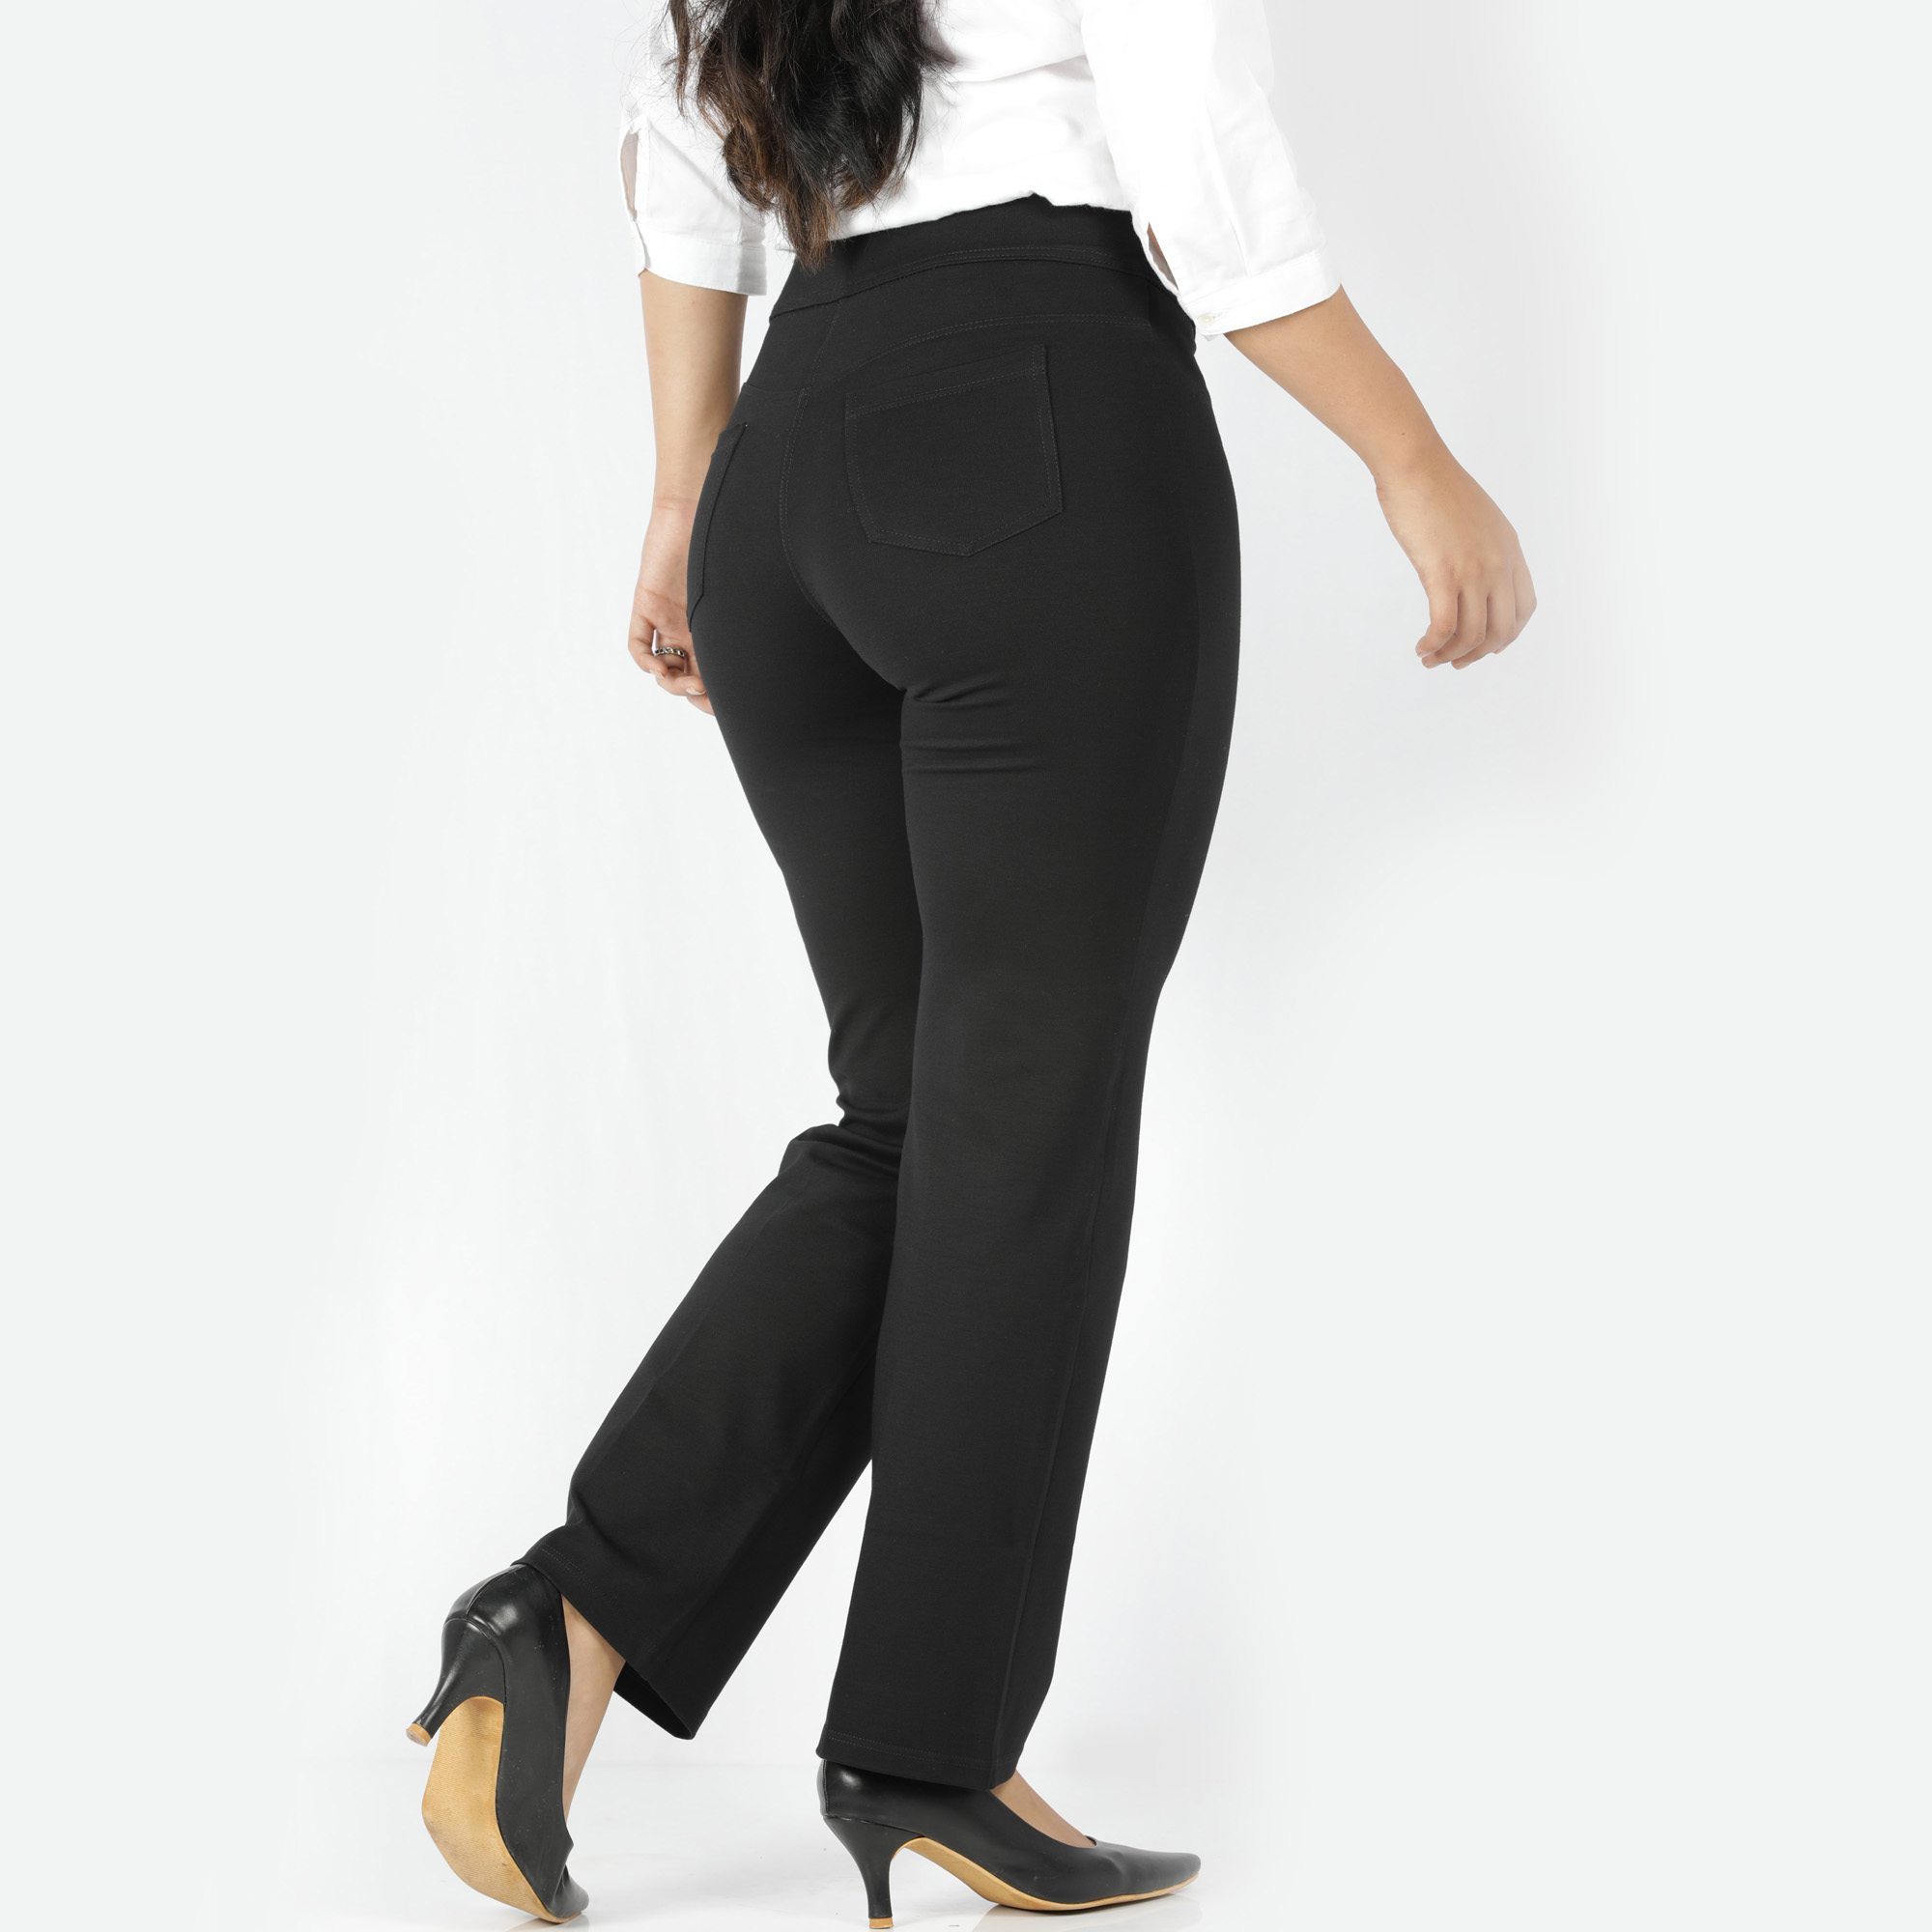 Grey pants women - Tummy tucker straight leg - 2 back pockets - Belore Slims